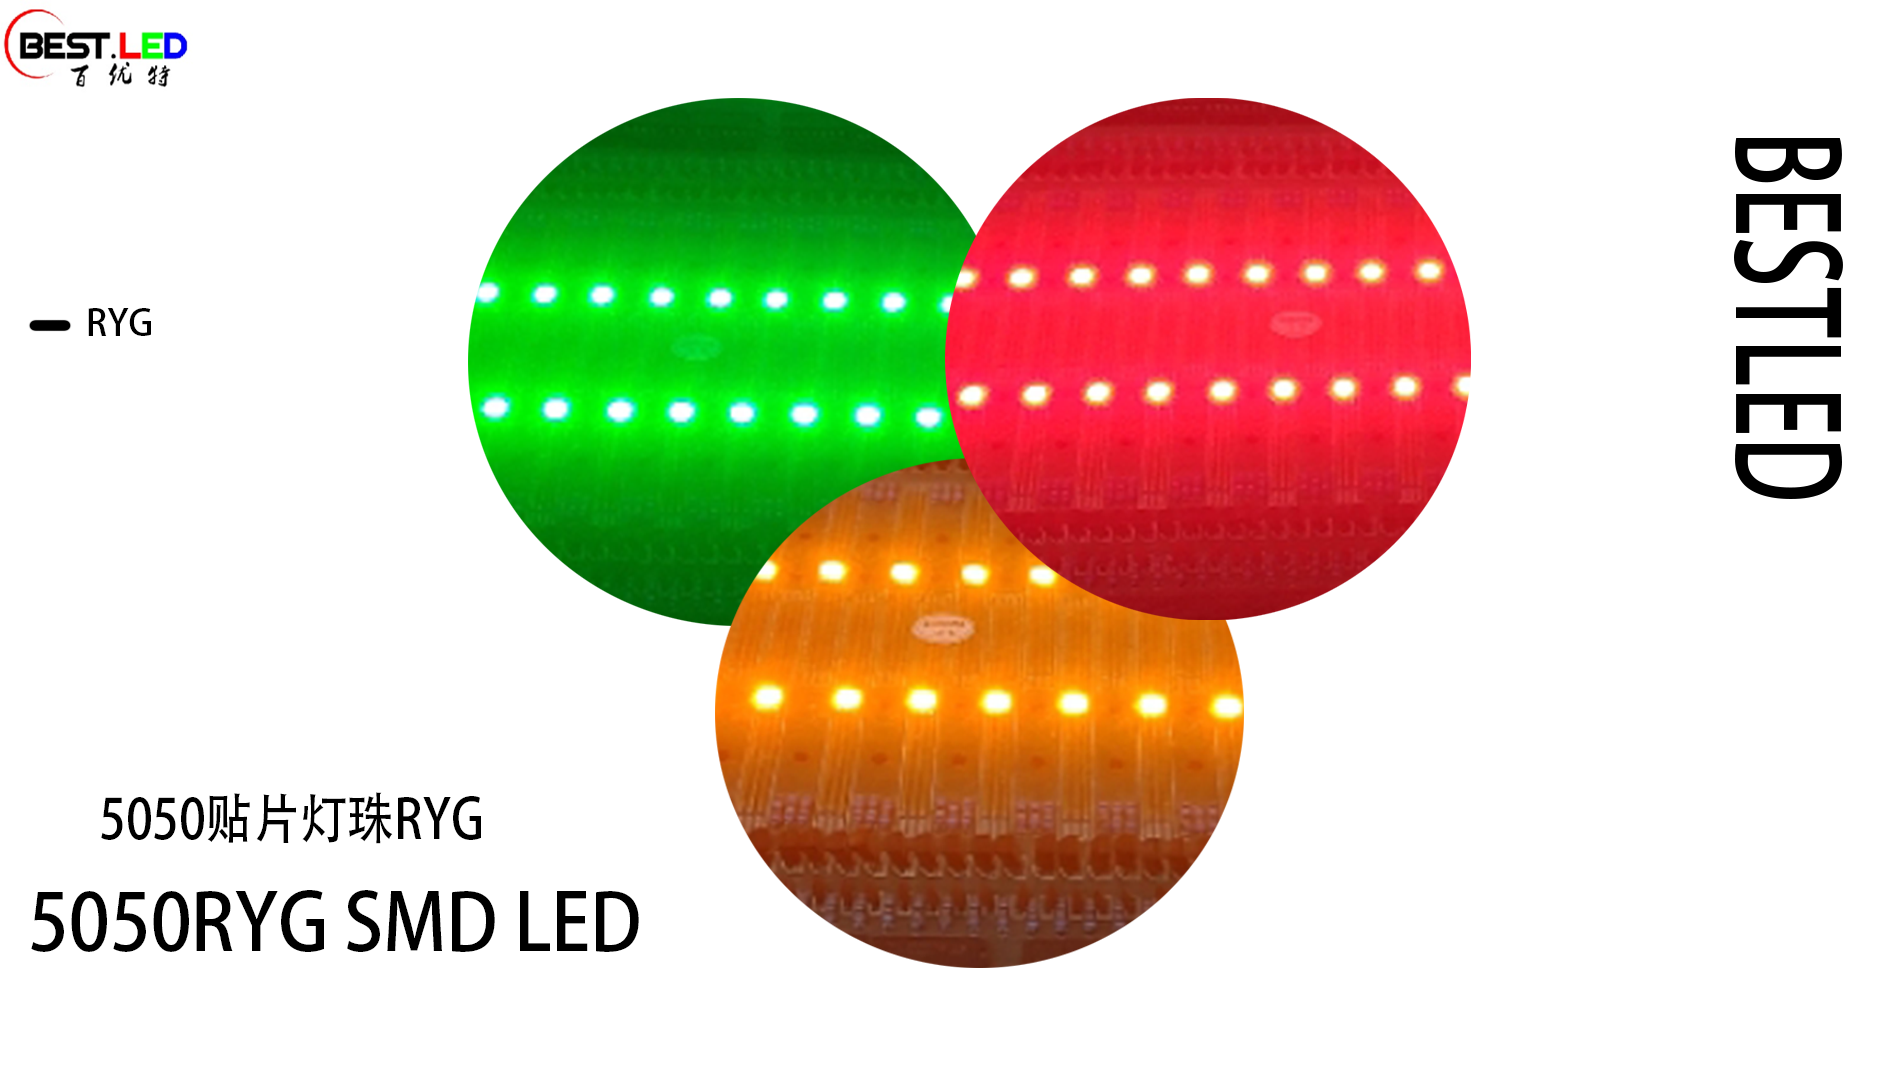 5050 SMD LED သည် Ryg သုံးအရောင် LED အနီရောင် + အဝါရောင် + အစိမ်းရောင်